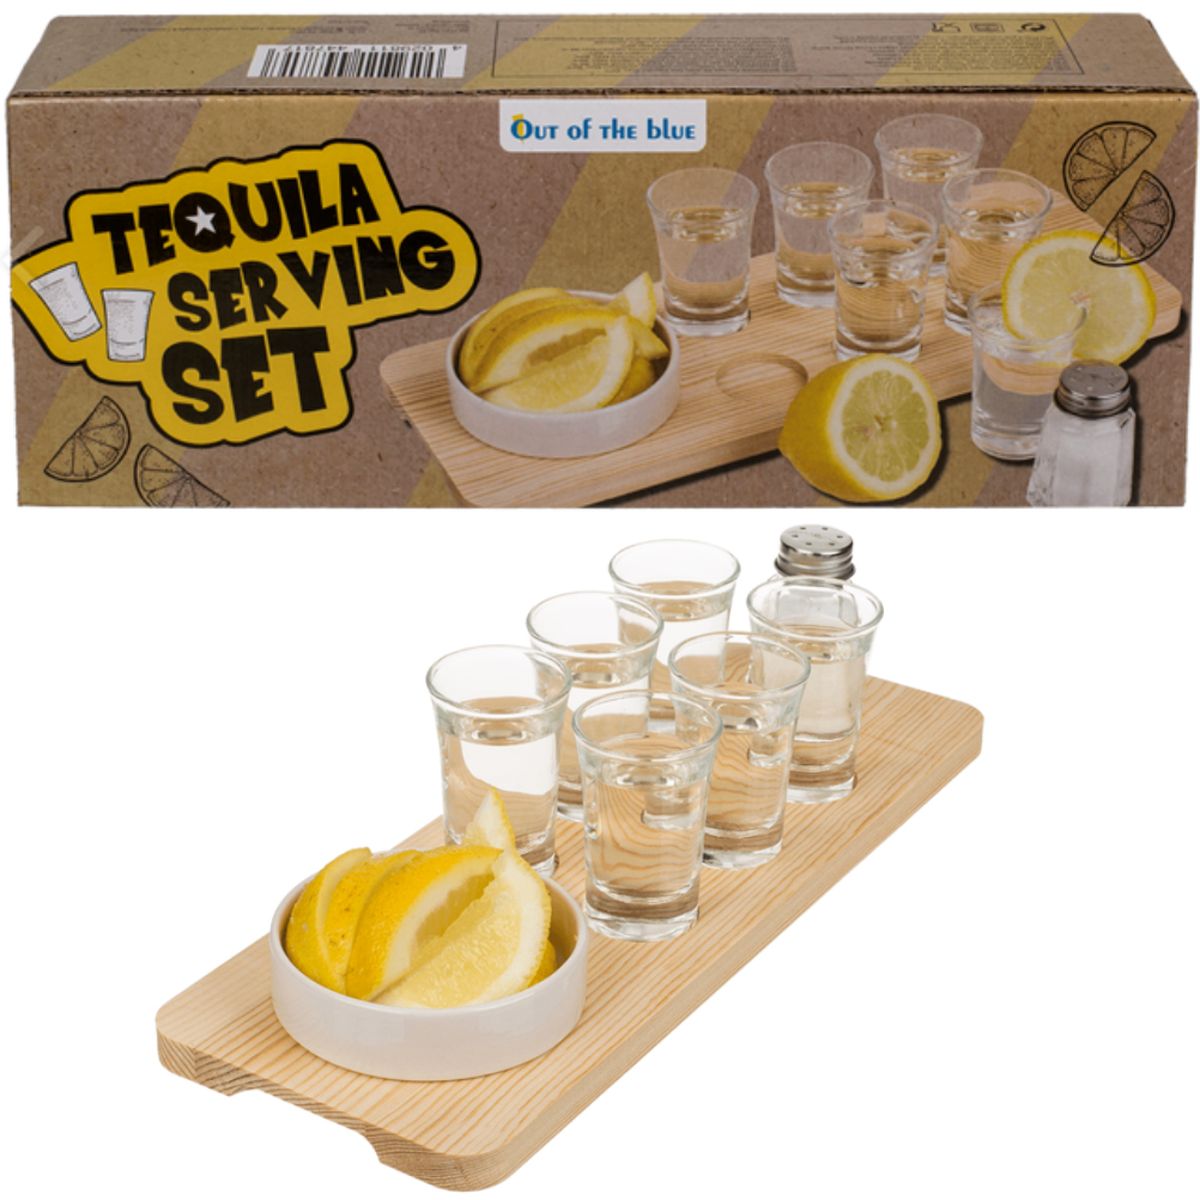 Tequila set on wooden board